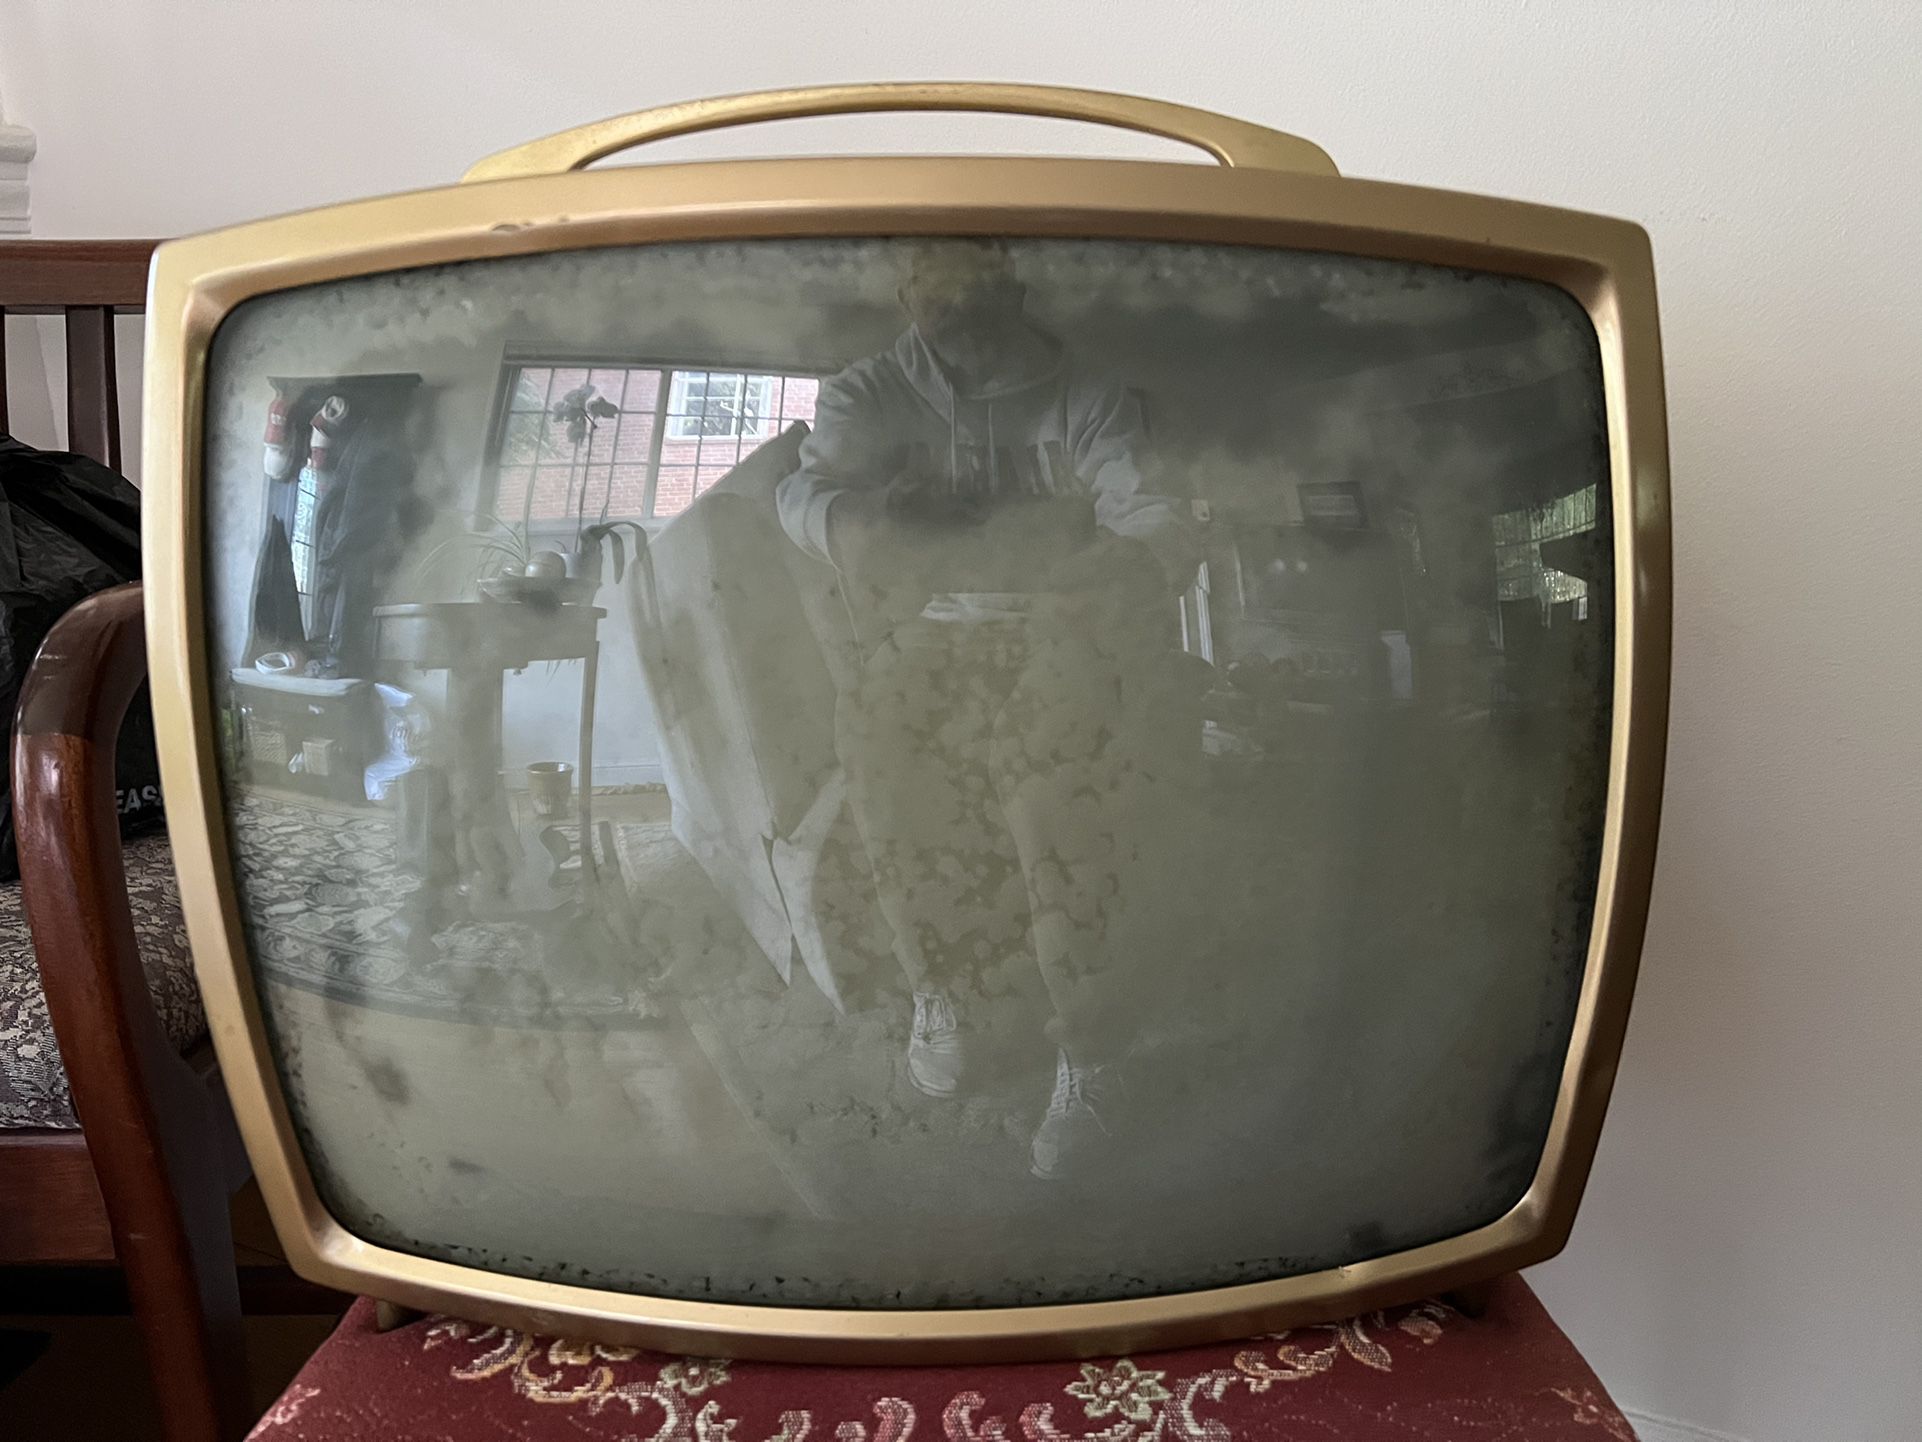 Vintage Setchell-Carlson TV ~ Model 19P63